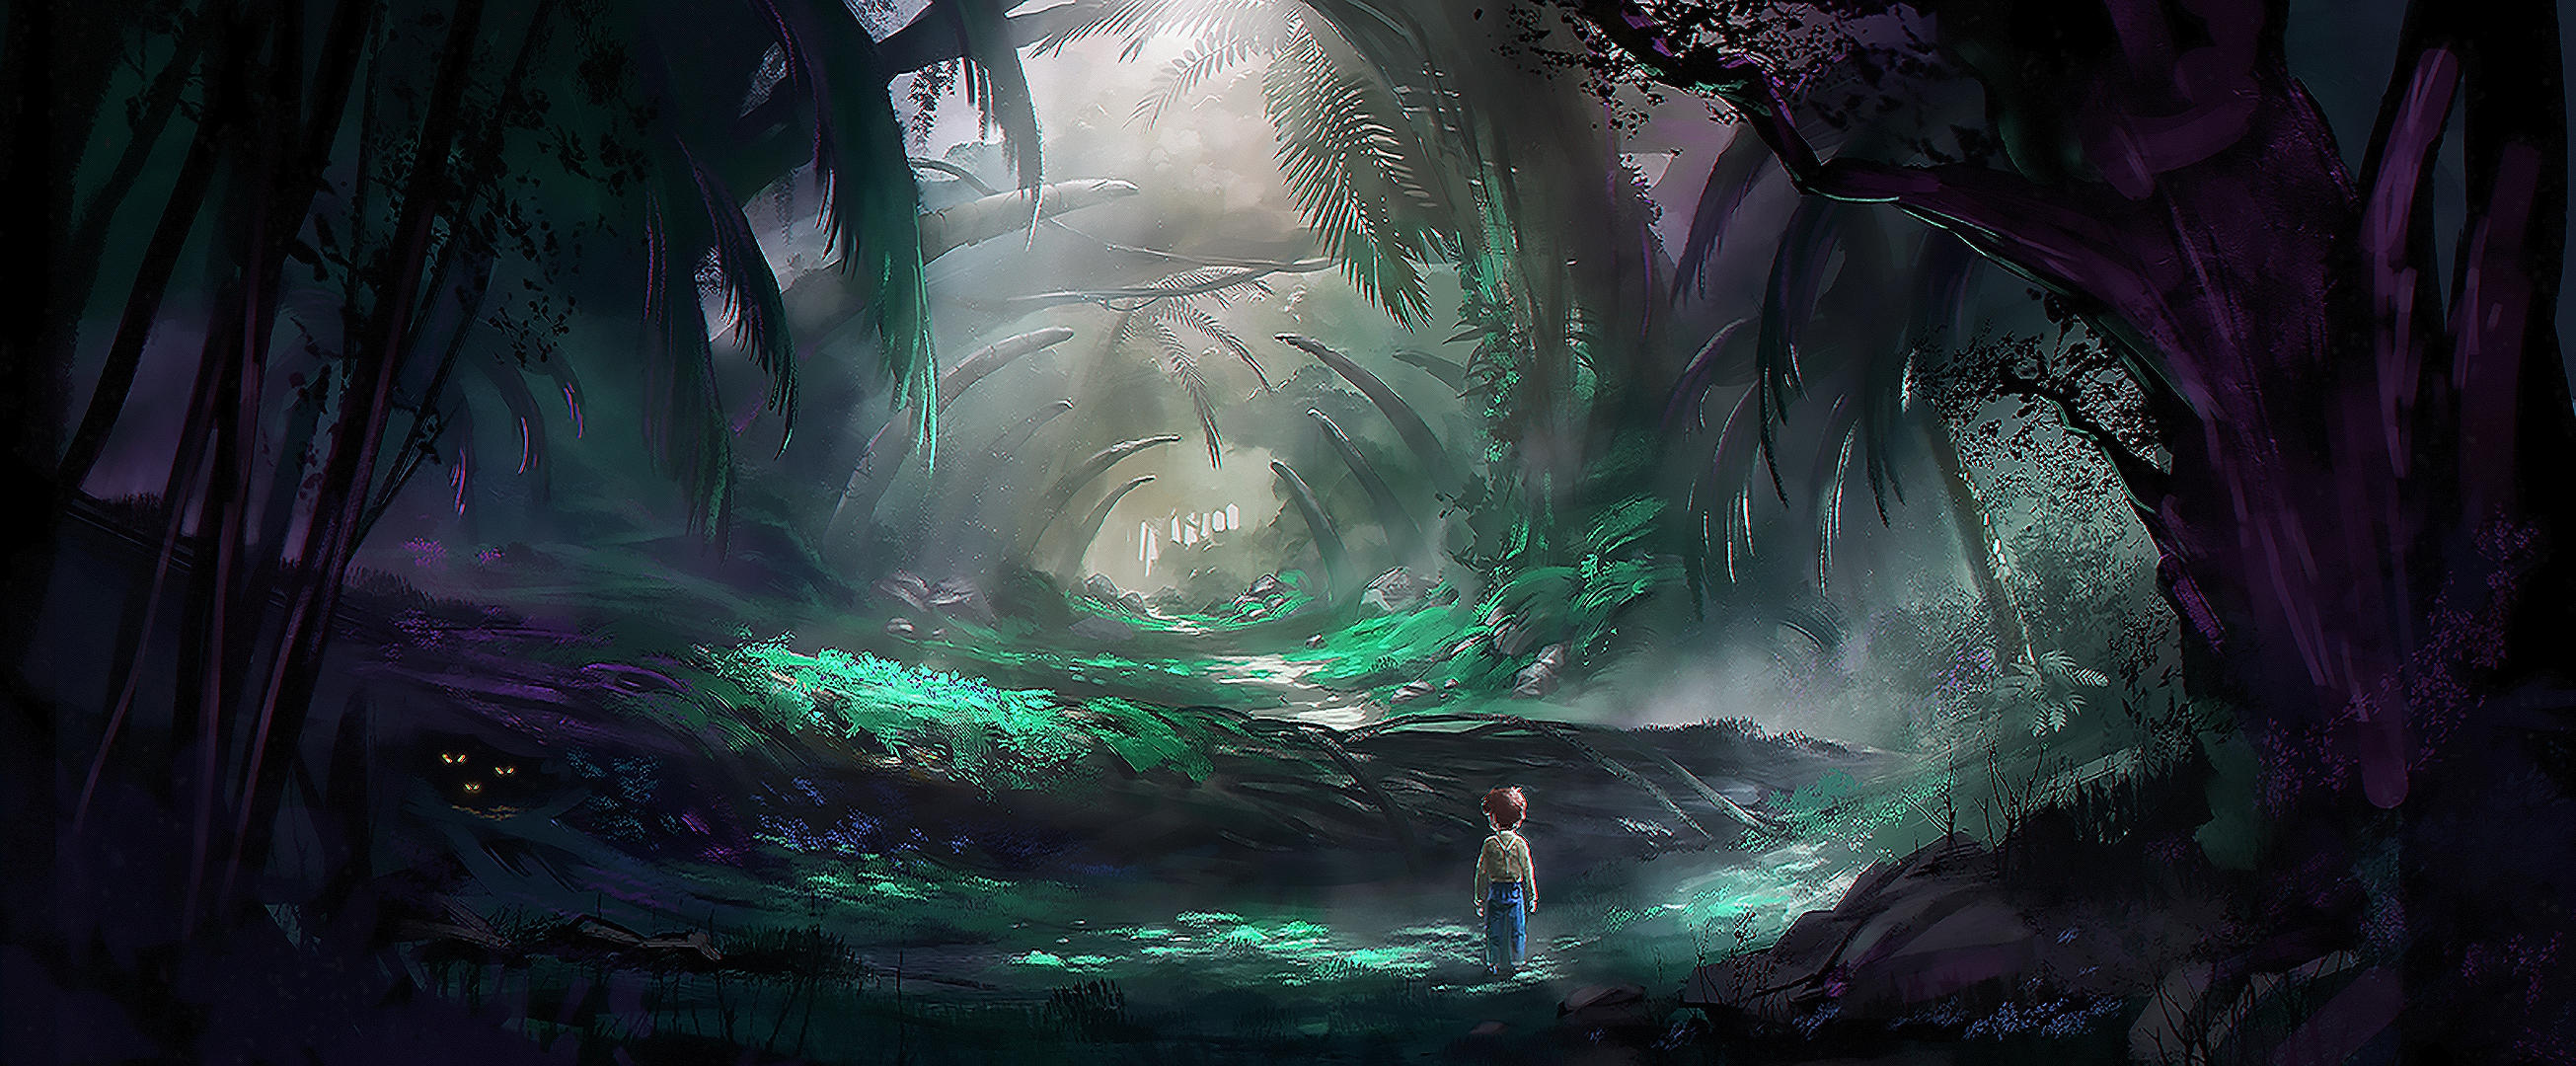 Fantasy Forest Picture by Jordan Grimmer